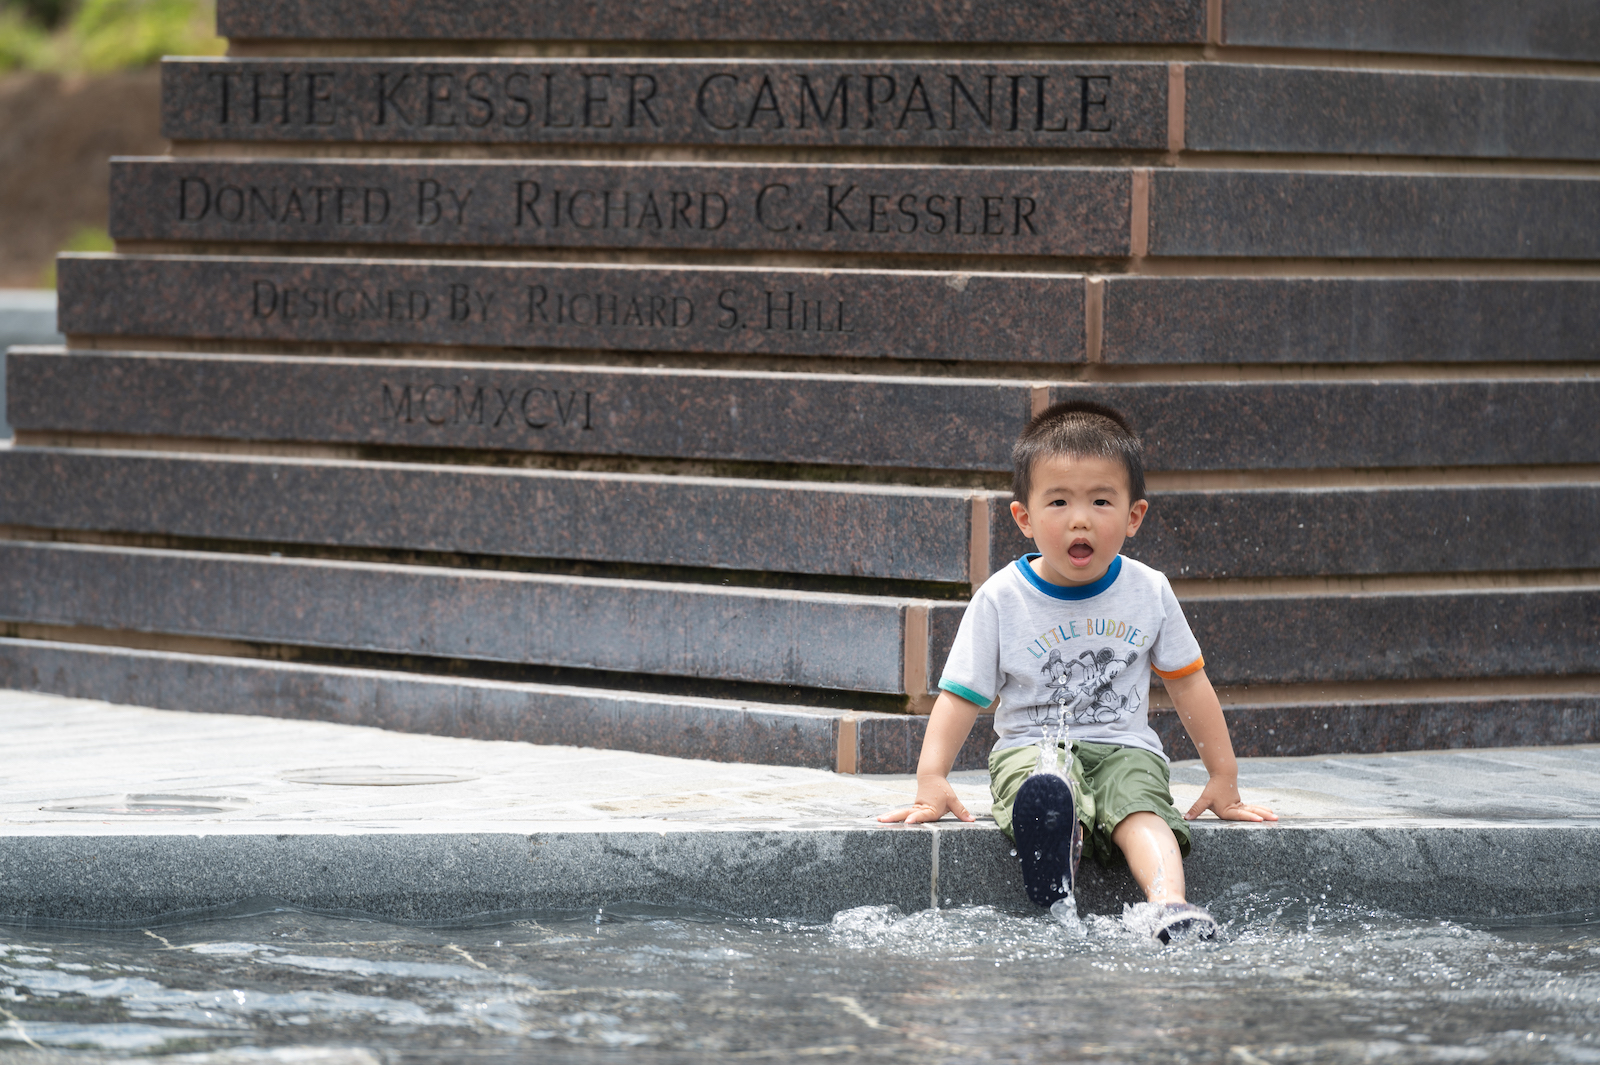 little boy in fountain at Kessler Campanile